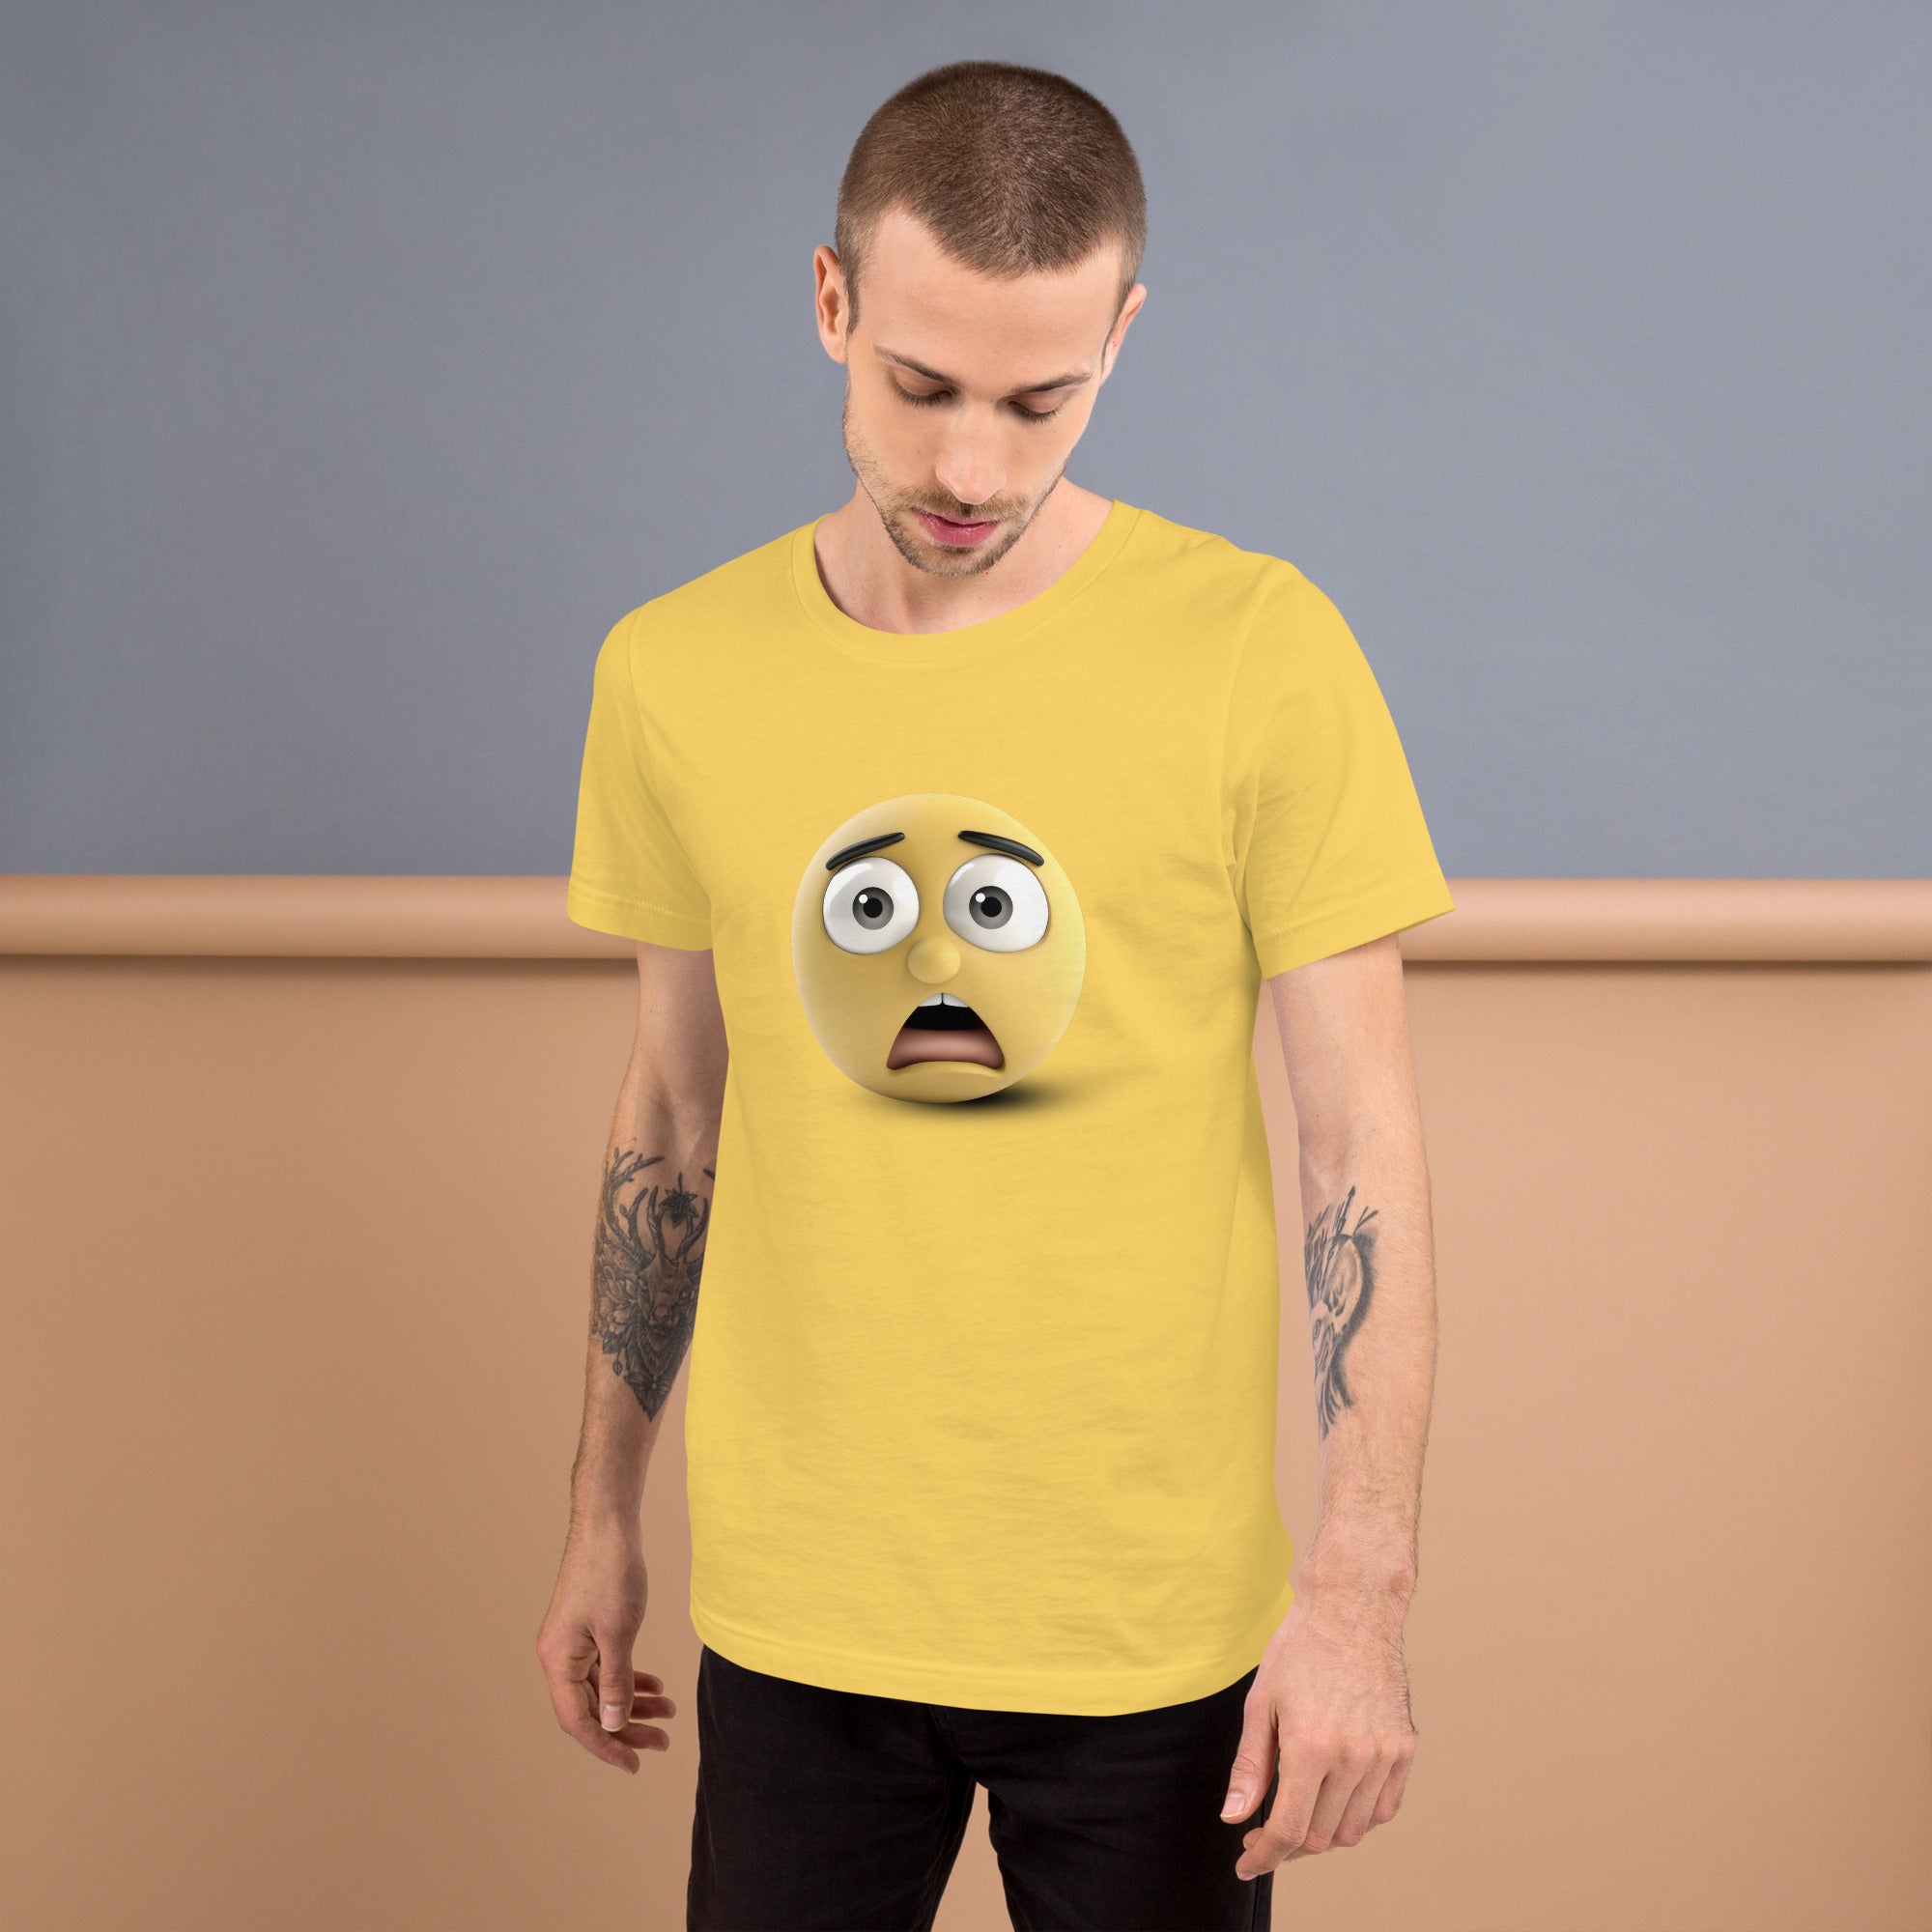 Unisex Staple T-Shirt Featuring Rocket Emoji